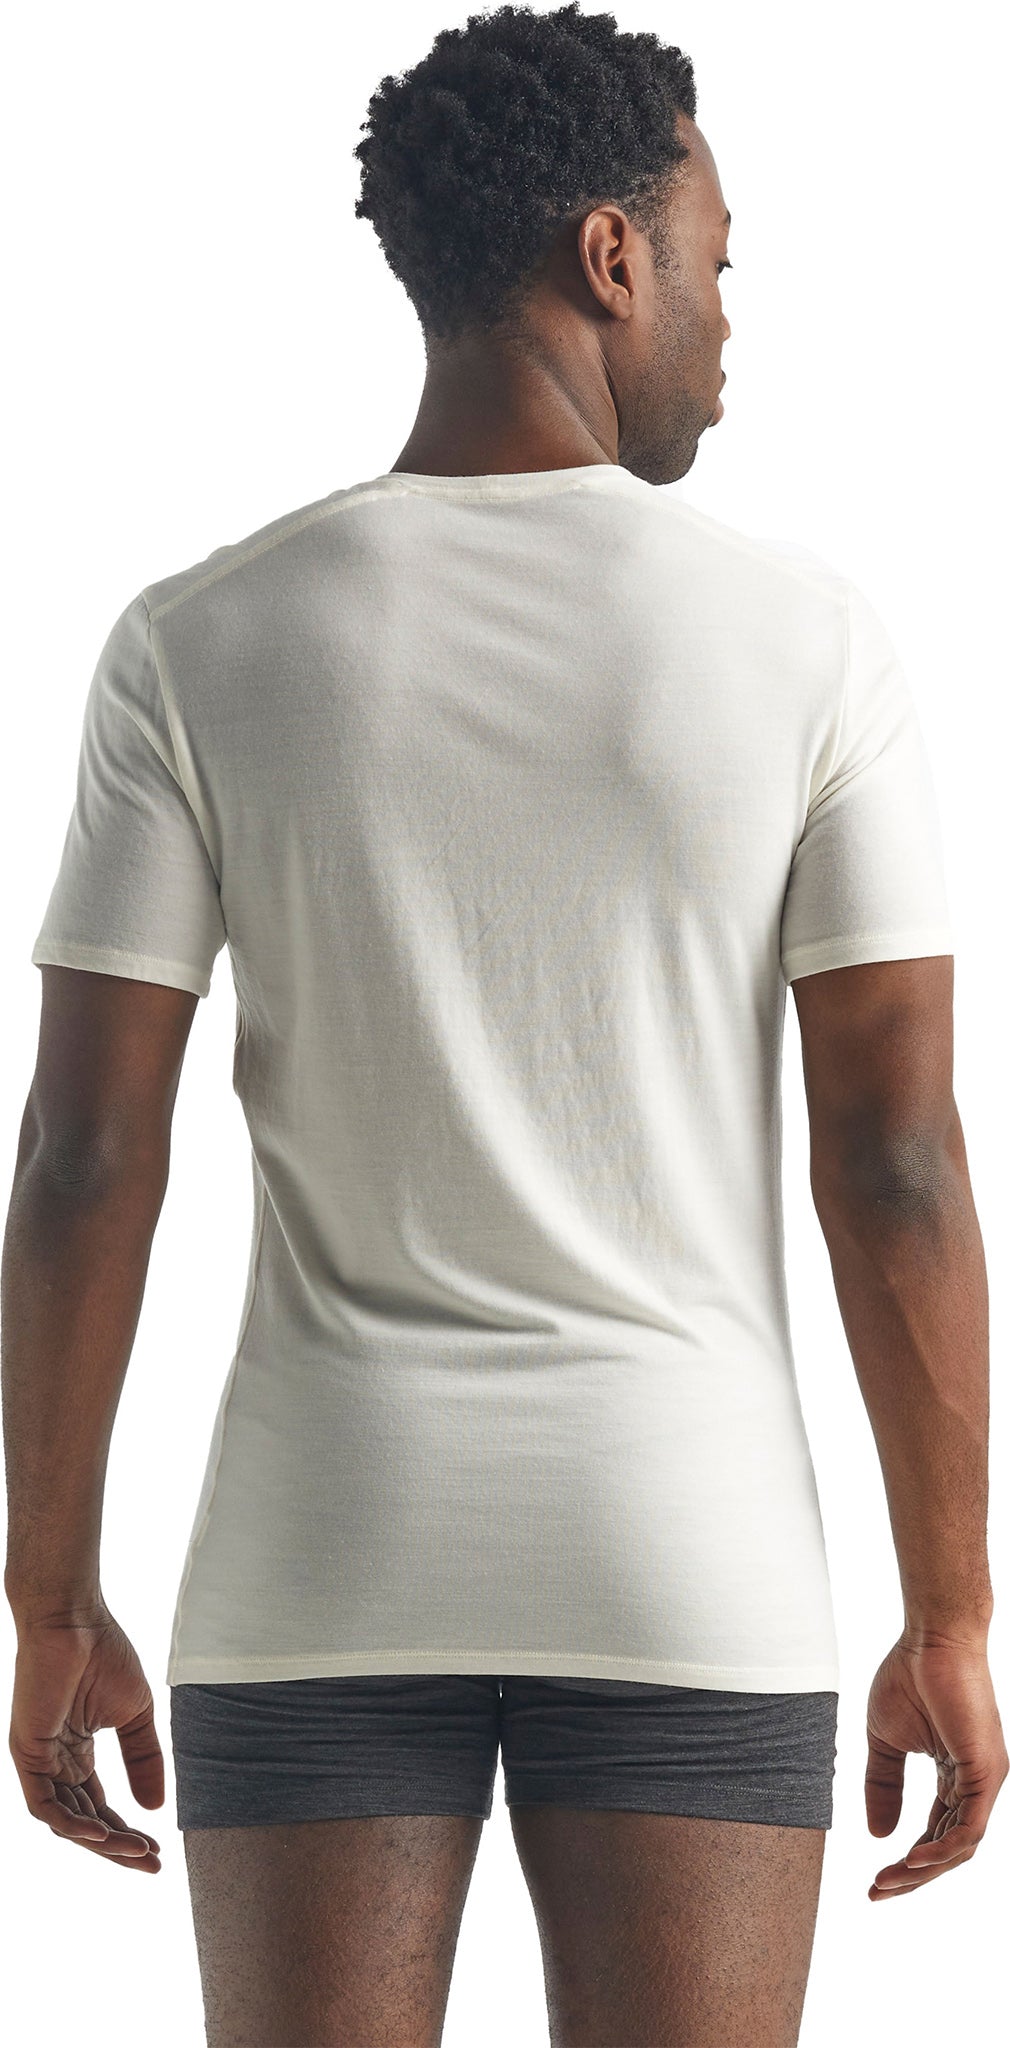 Icebreaker Anatomica short-sleeved shirt